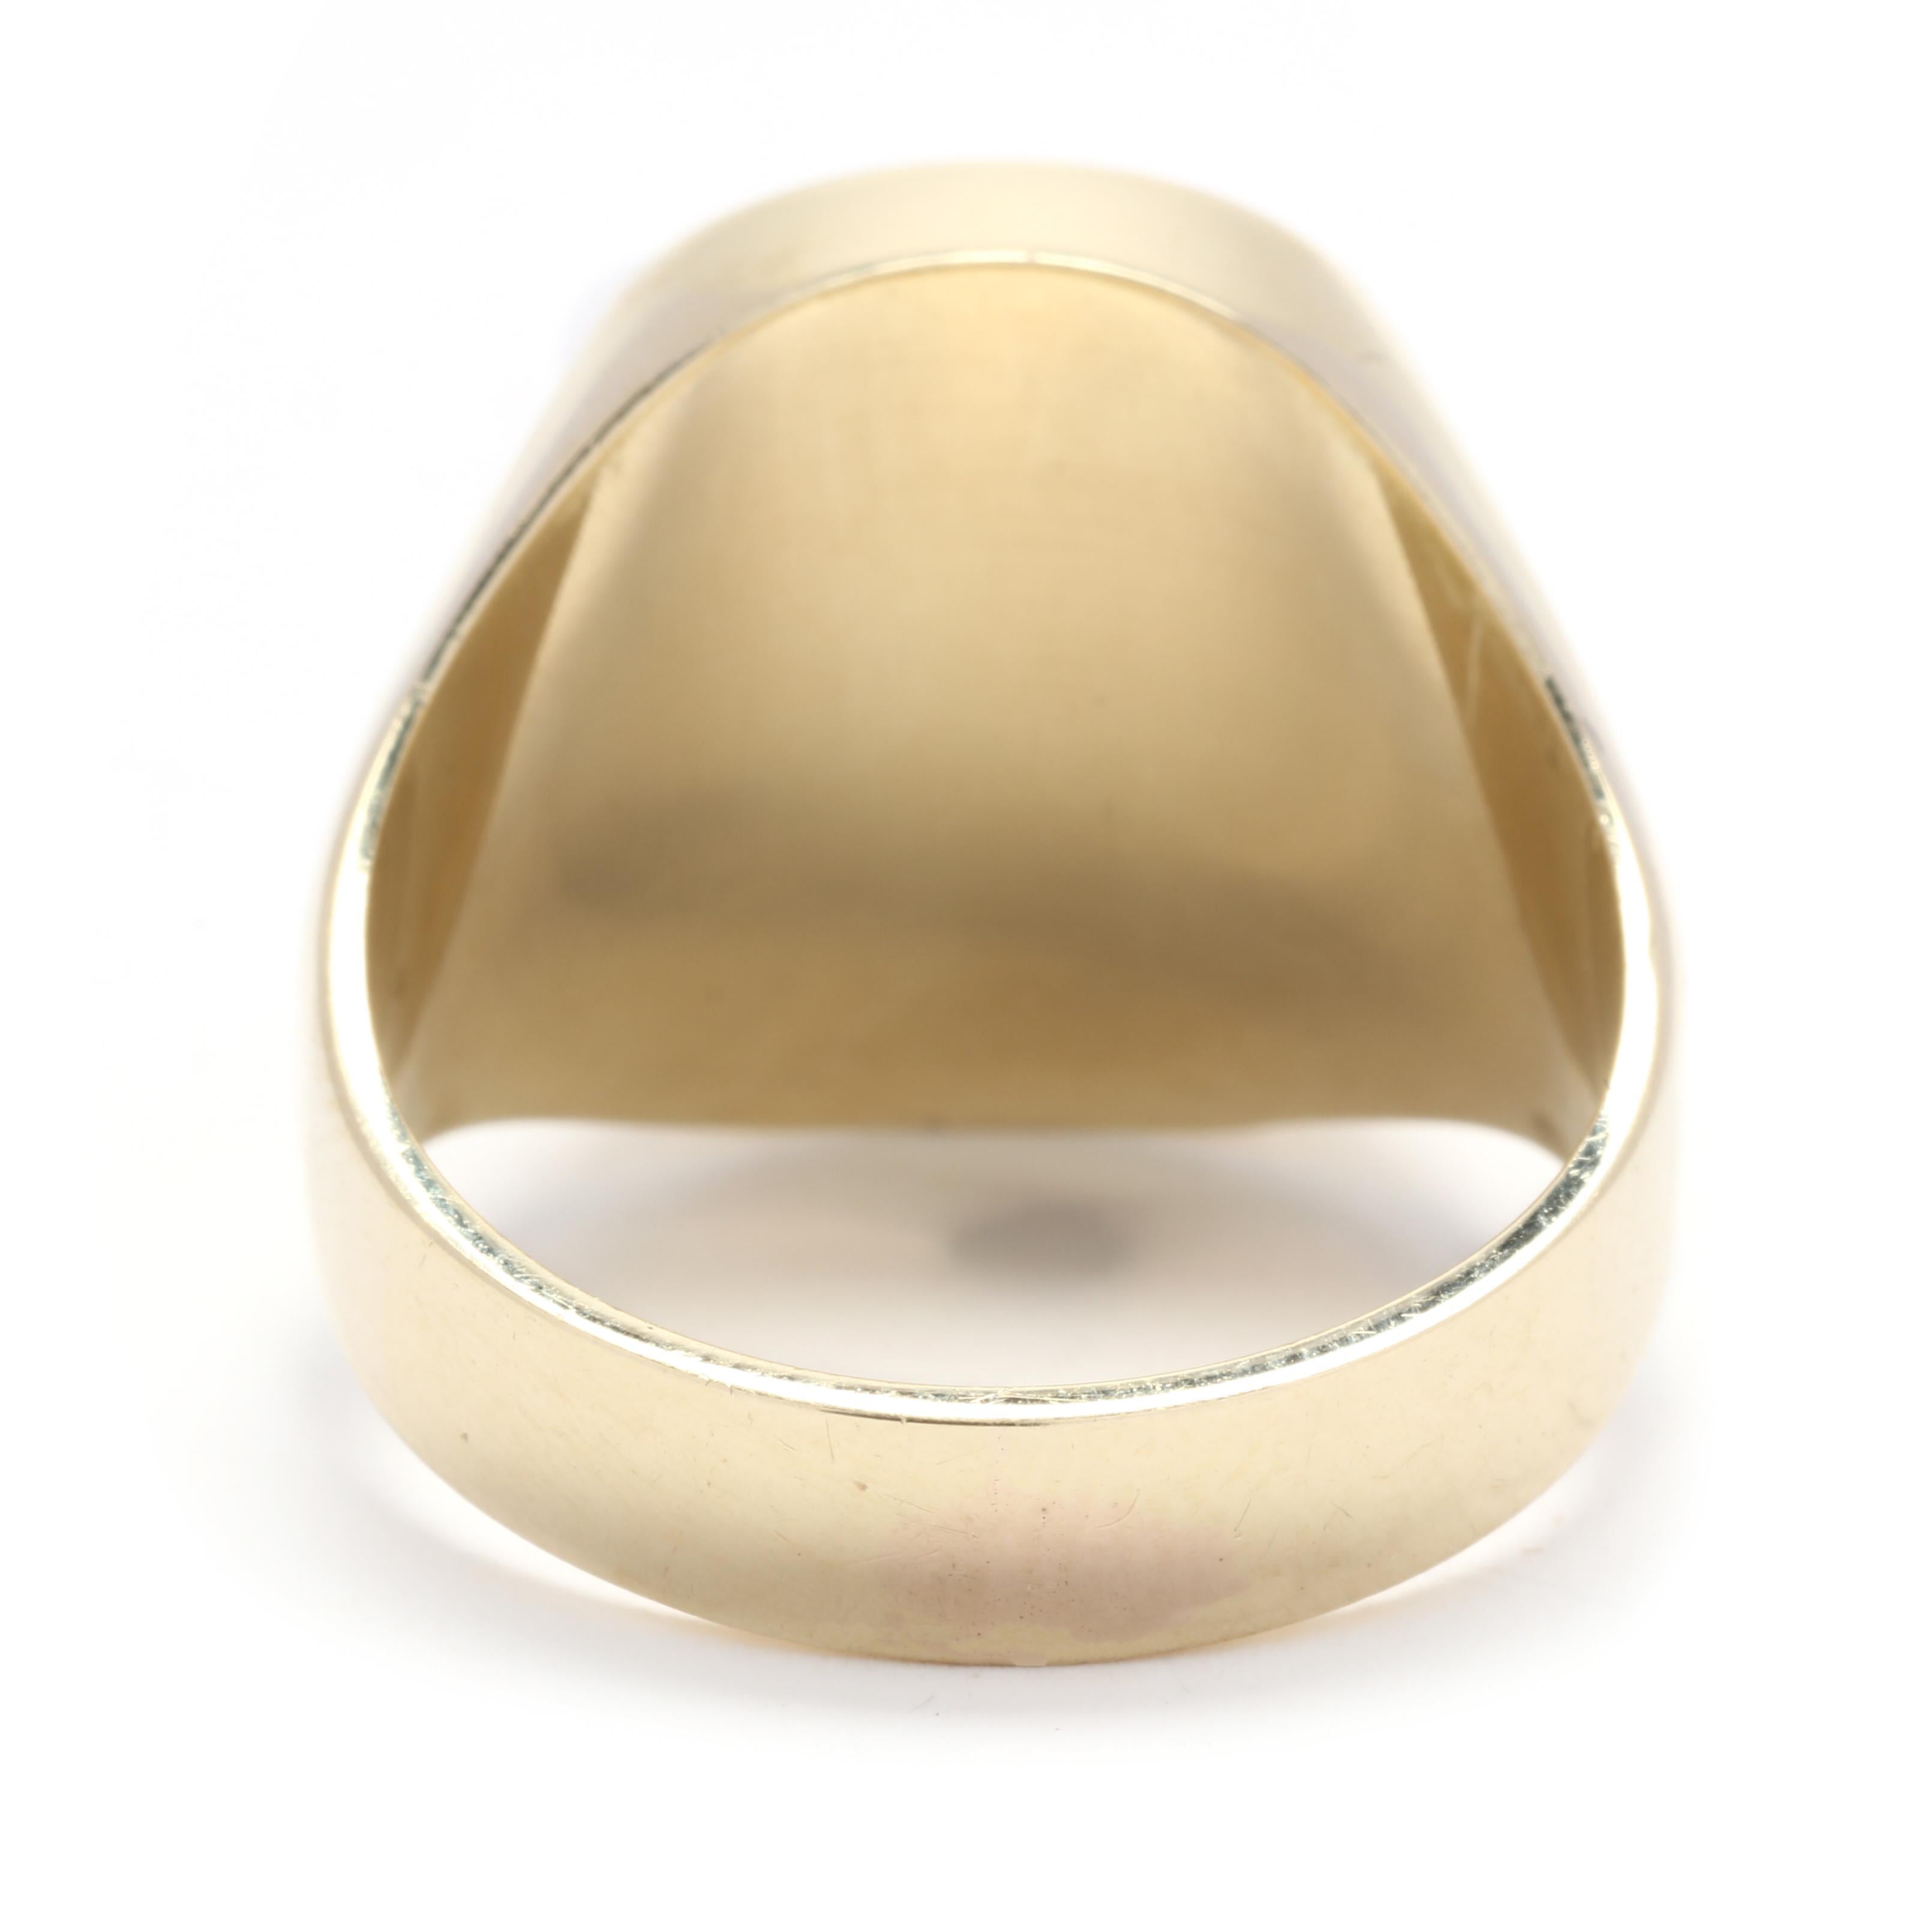 Mixed Cut Black Onyx and Malachite Ring, 14KT Yellow Gold, Ring Size 10, Large Statement